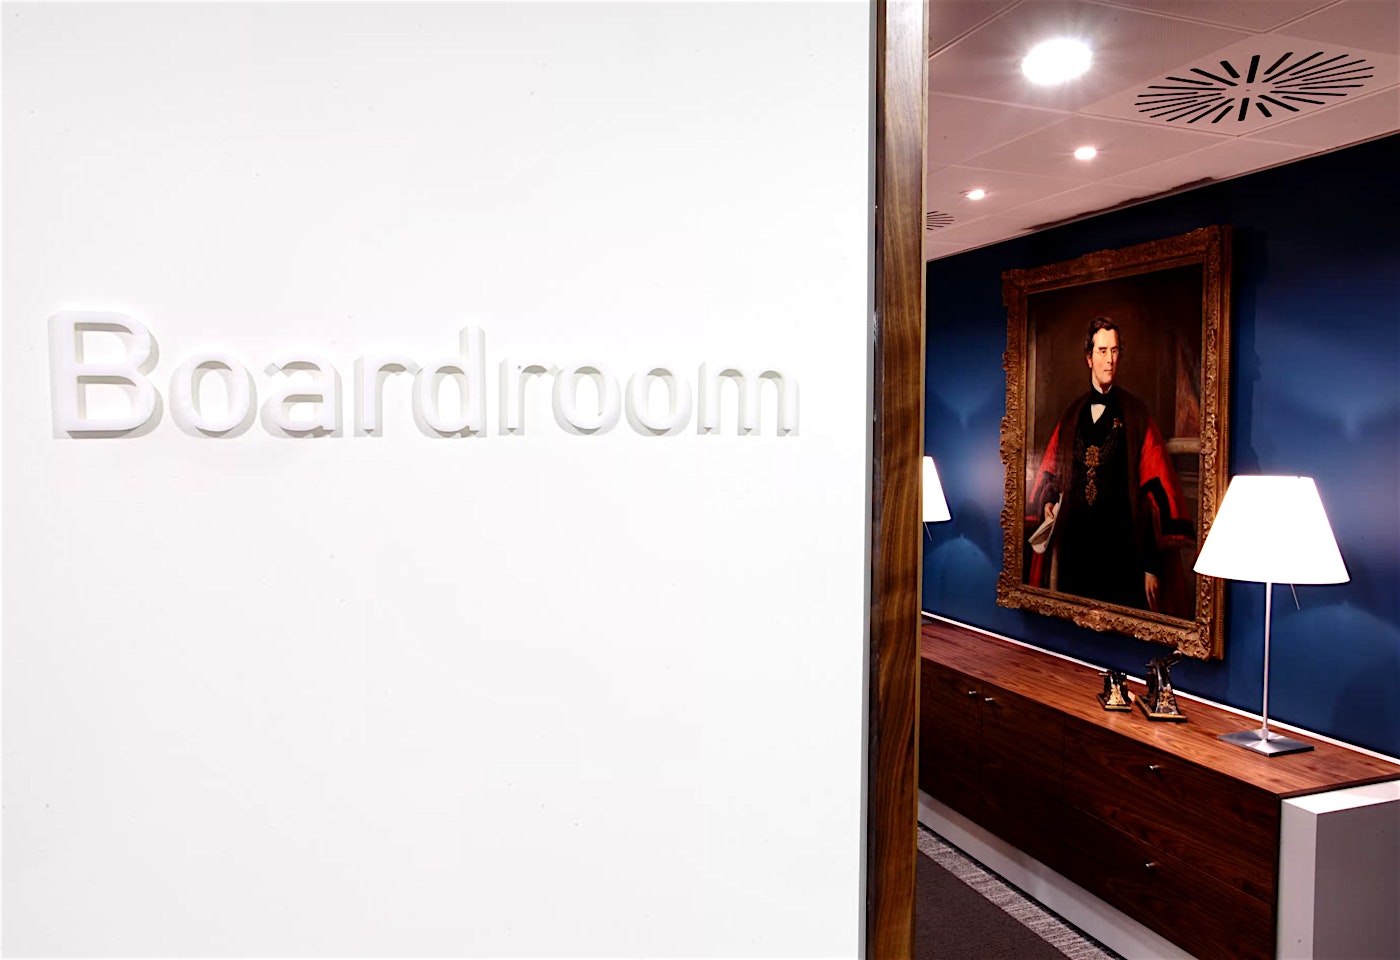 The Boardroom london bridge meeting room 